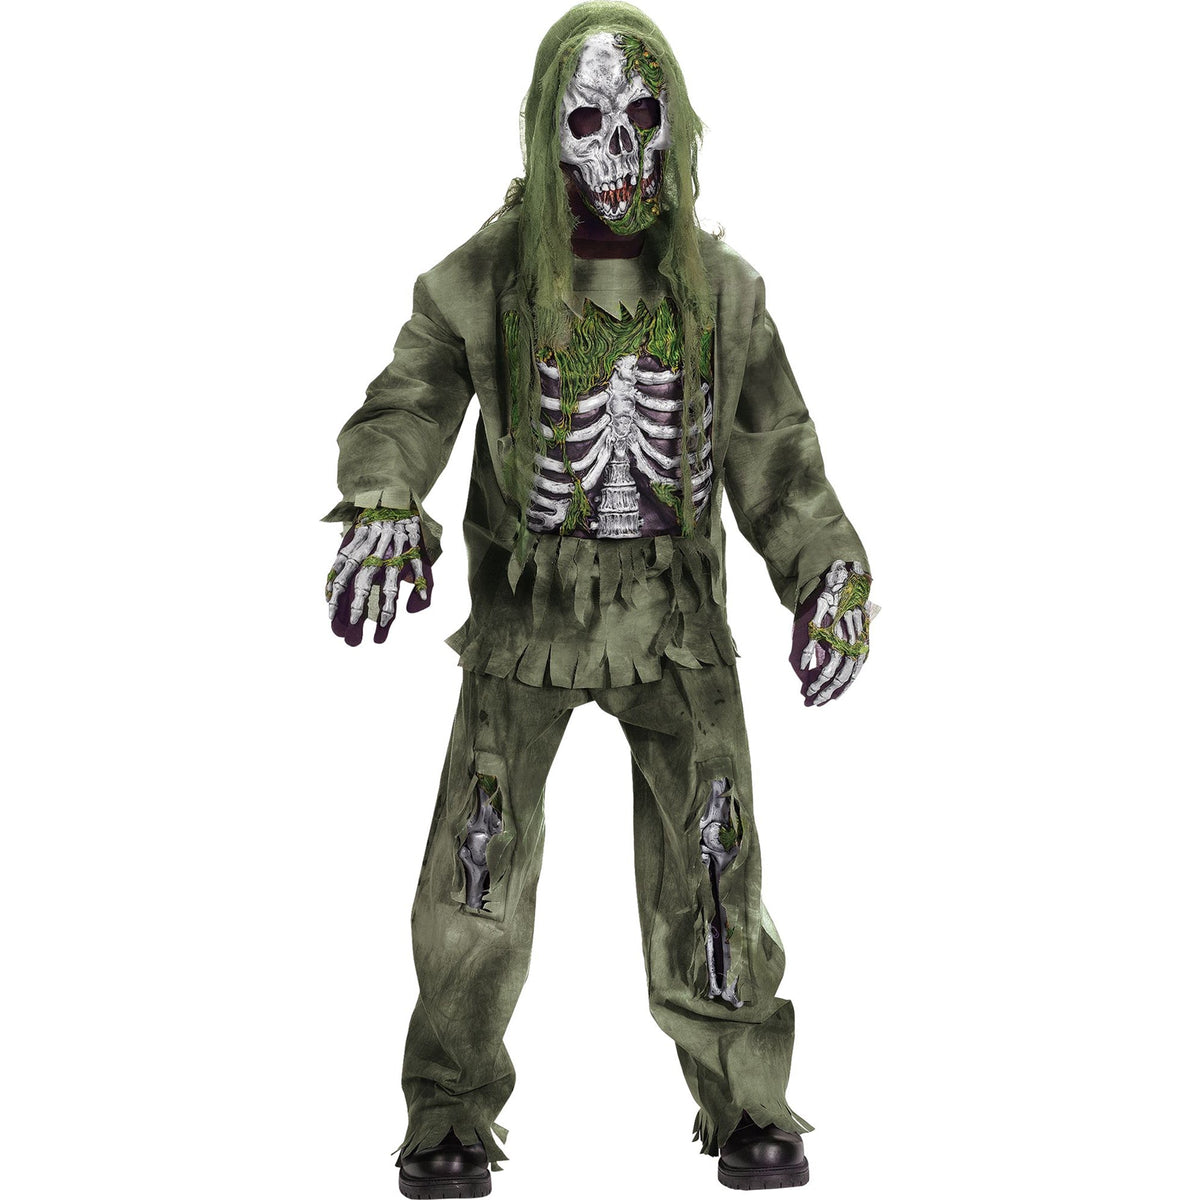 FUN WORLD Costumes Skeleton Zombie Costume for Kids